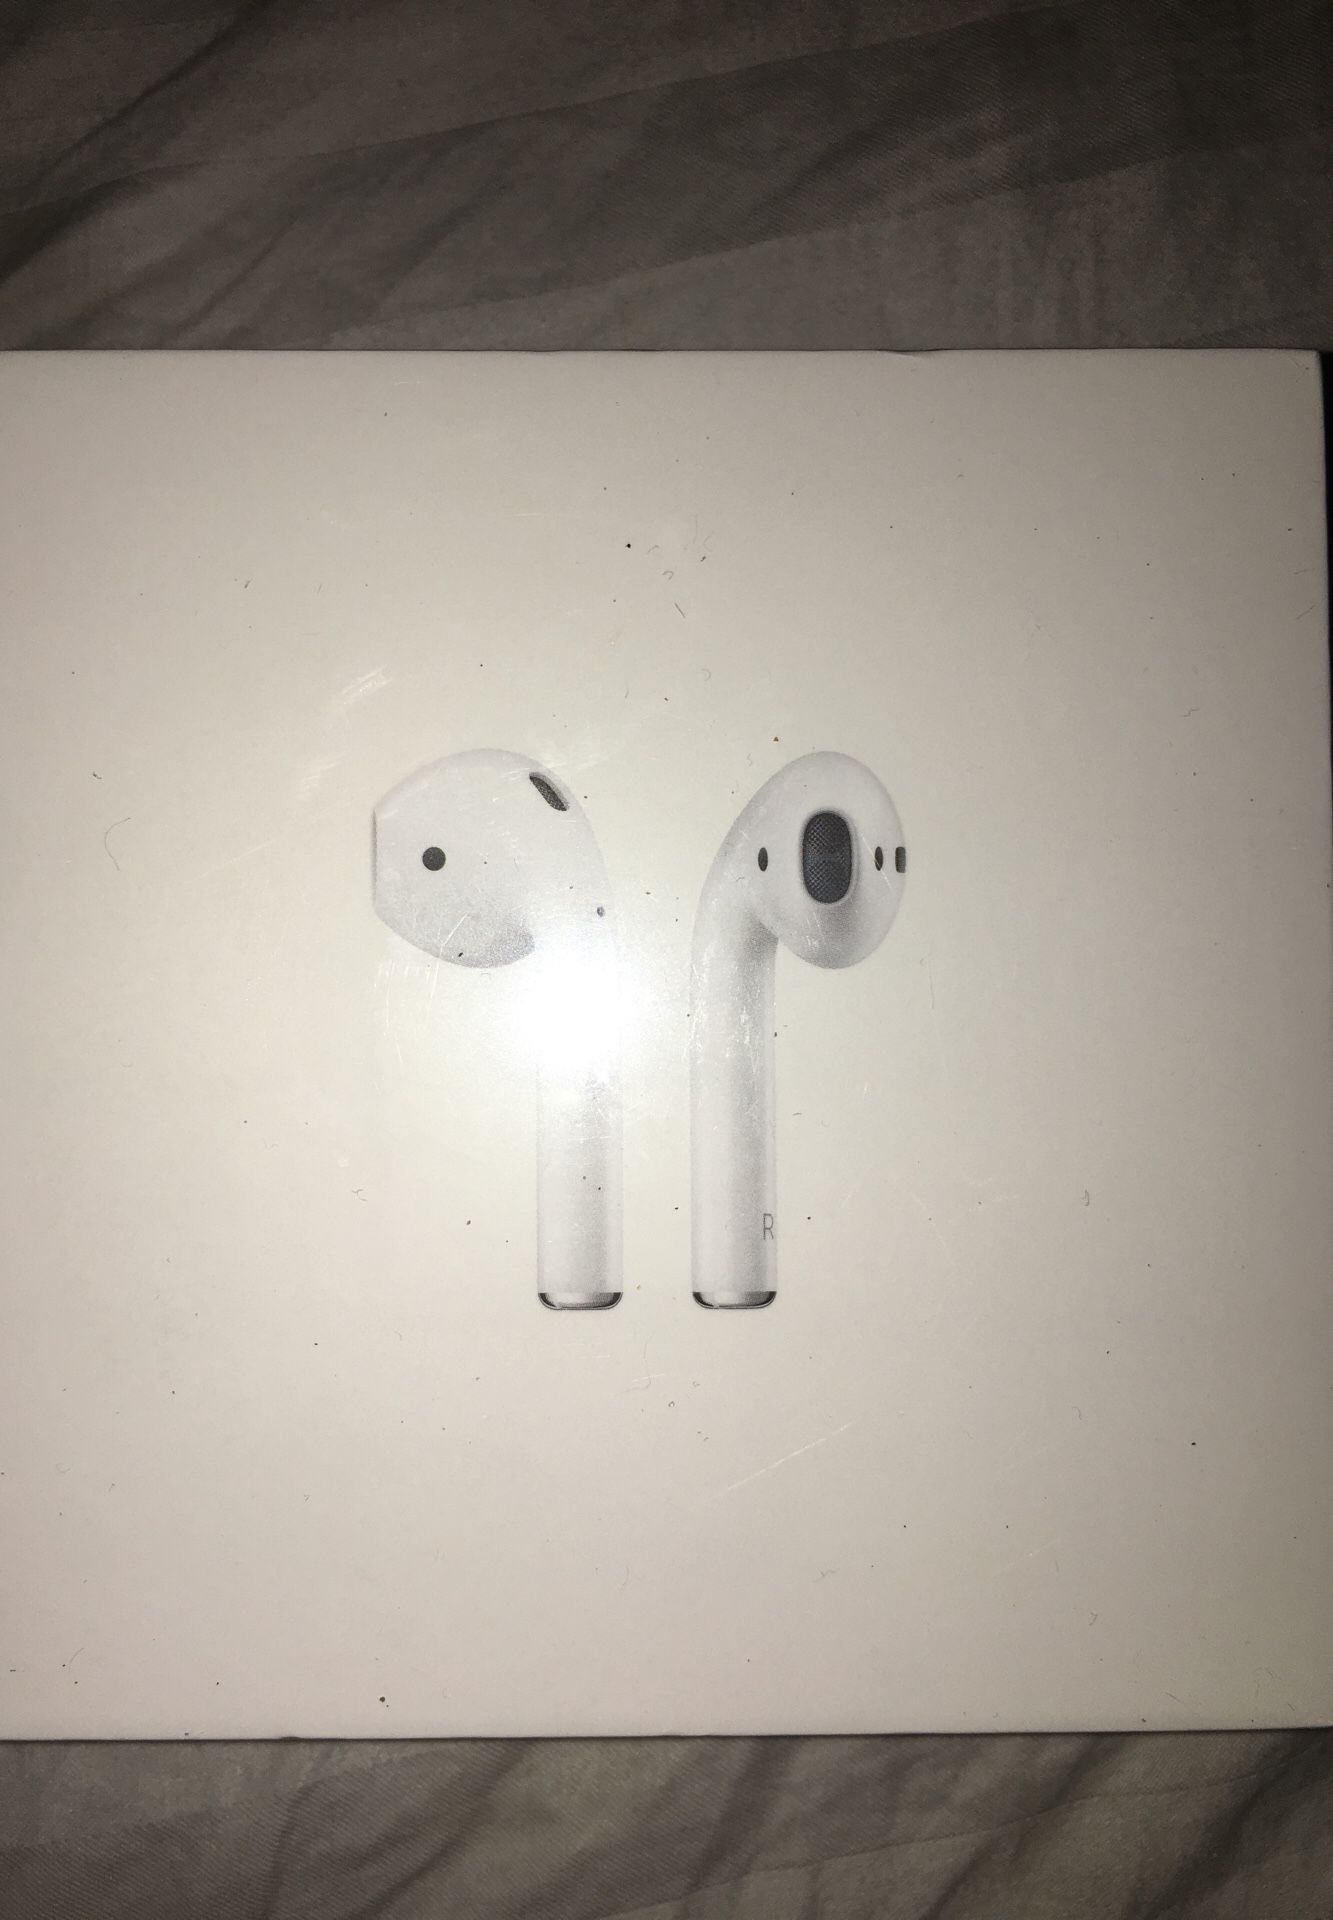 Brand new in the box Apple EarPods